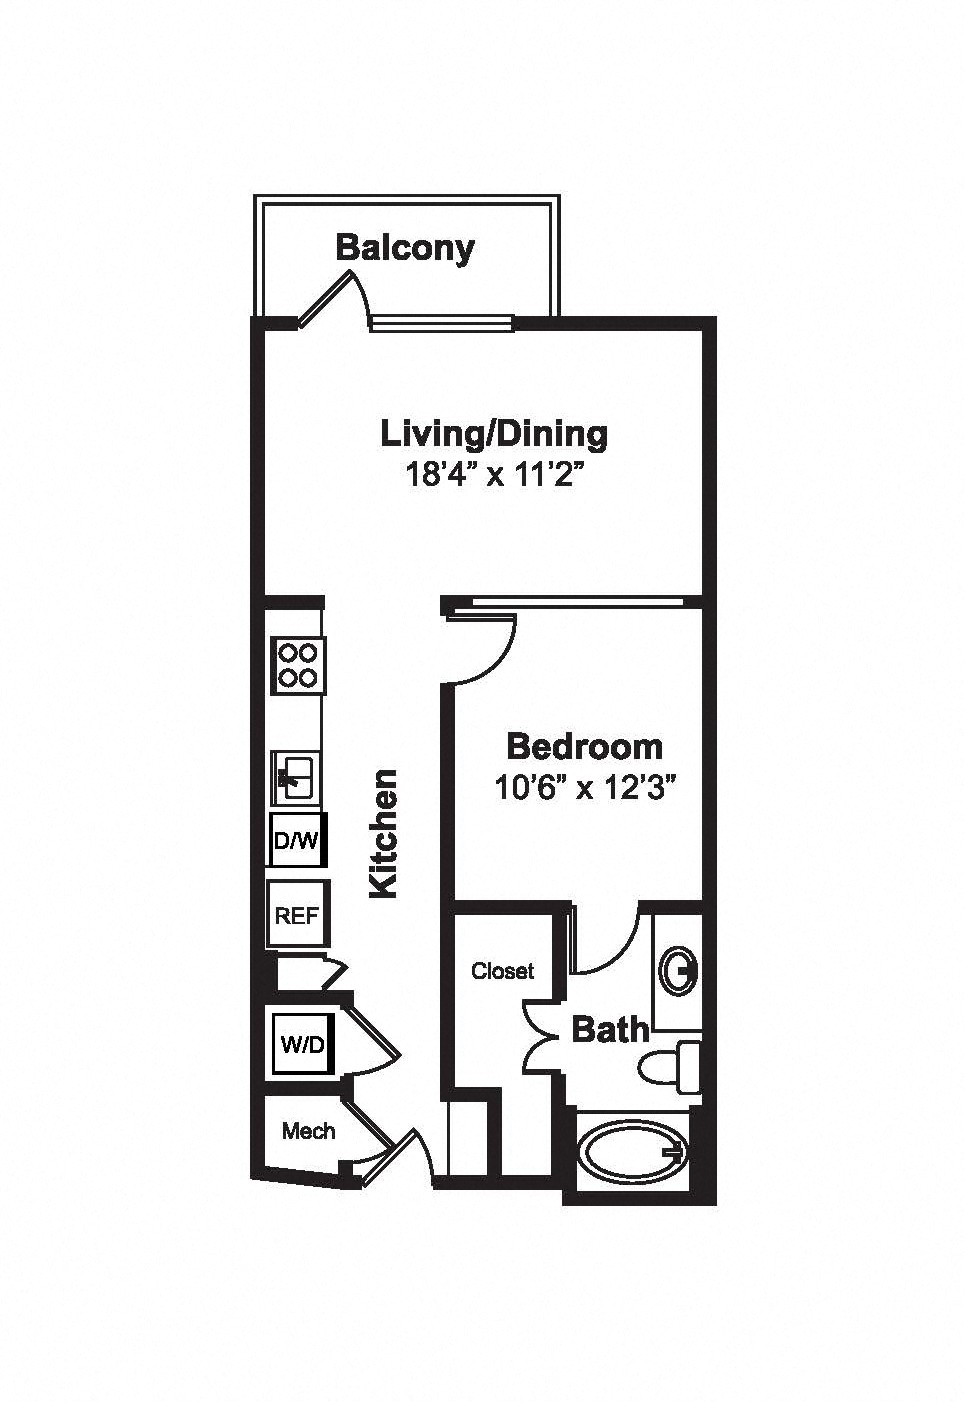 S3 Floorplan Image